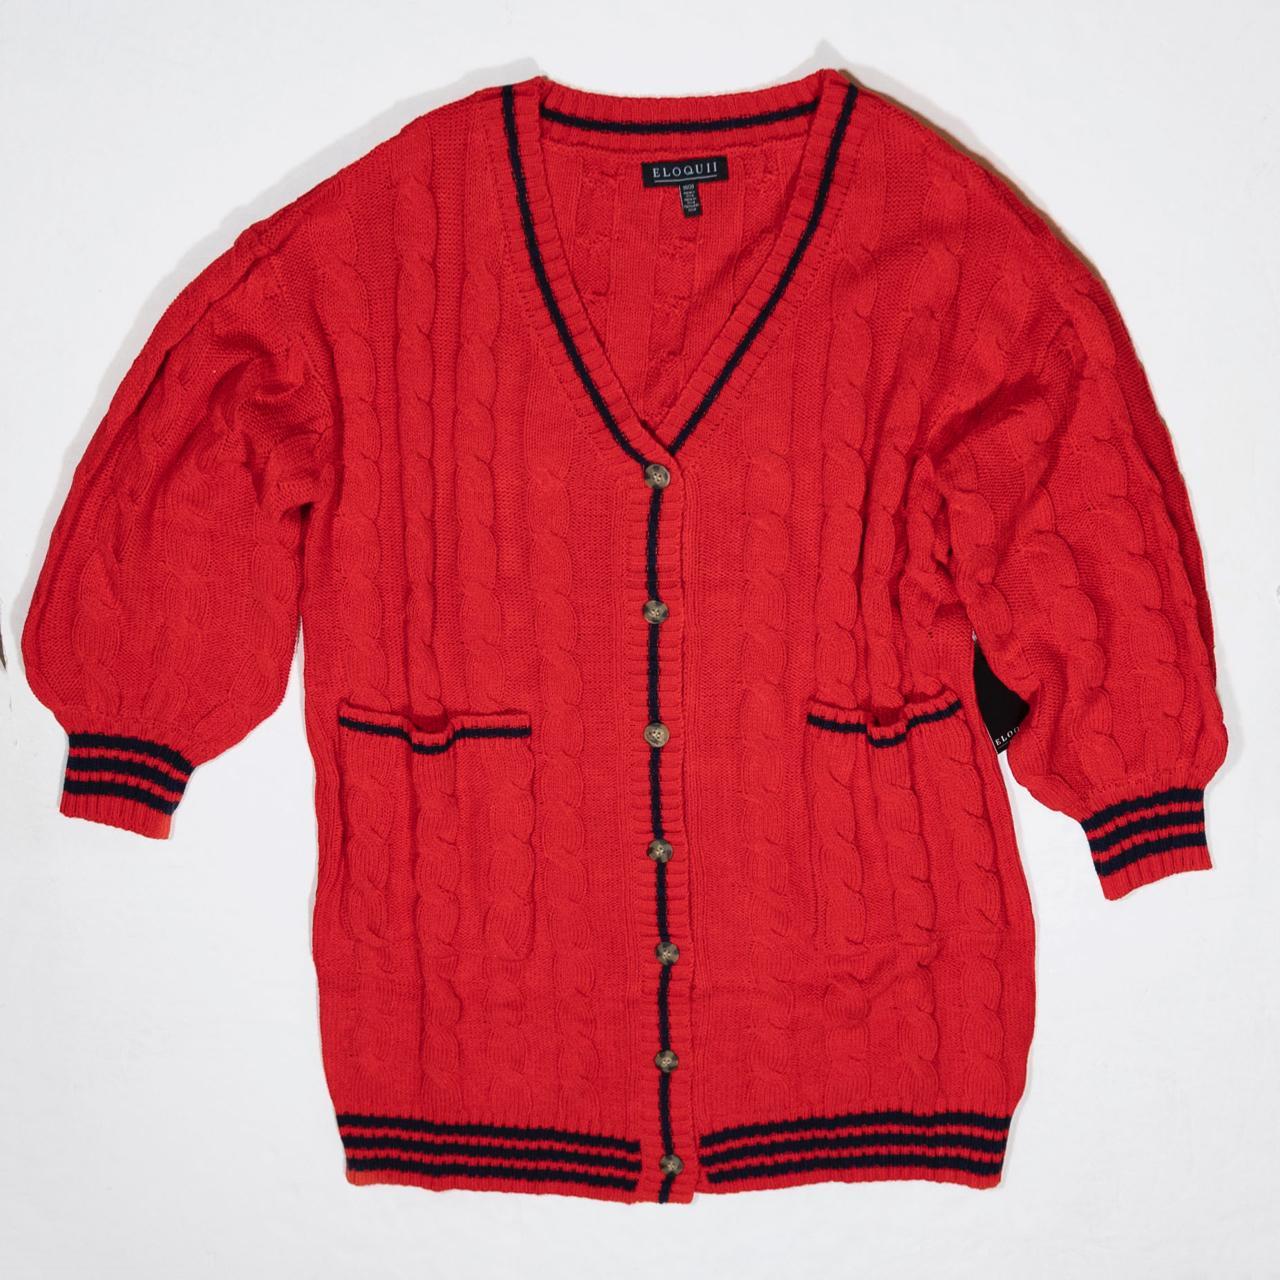 Eloquii Women's Red Cardigan